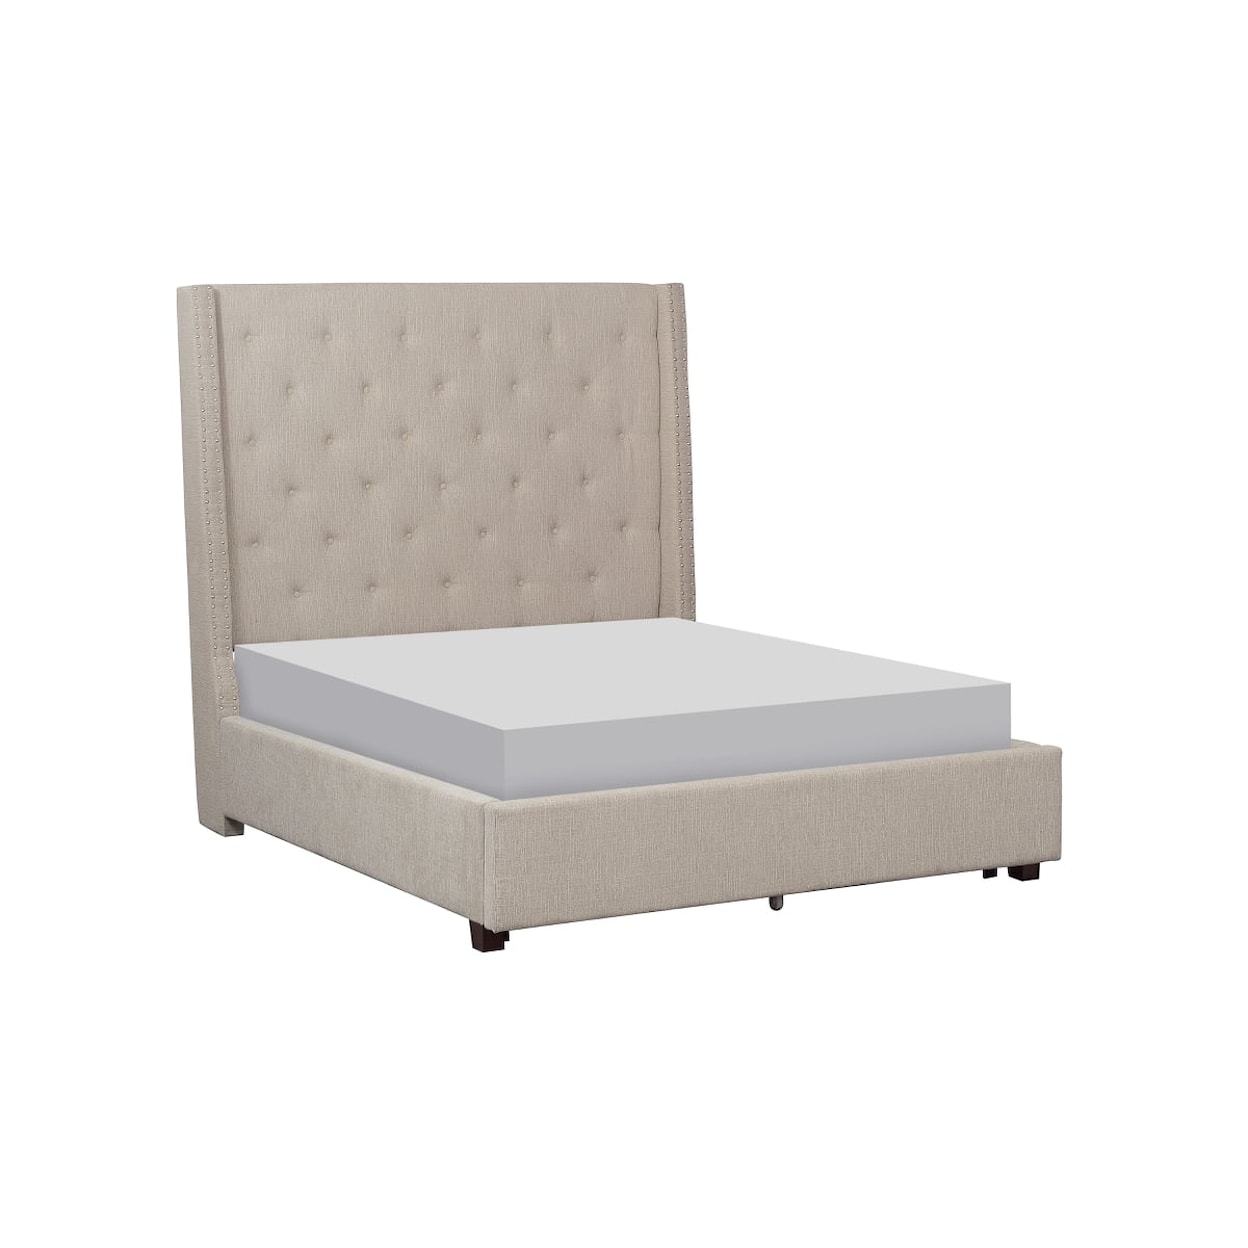 Homelegance Furniture Fairborn Queen  Bed